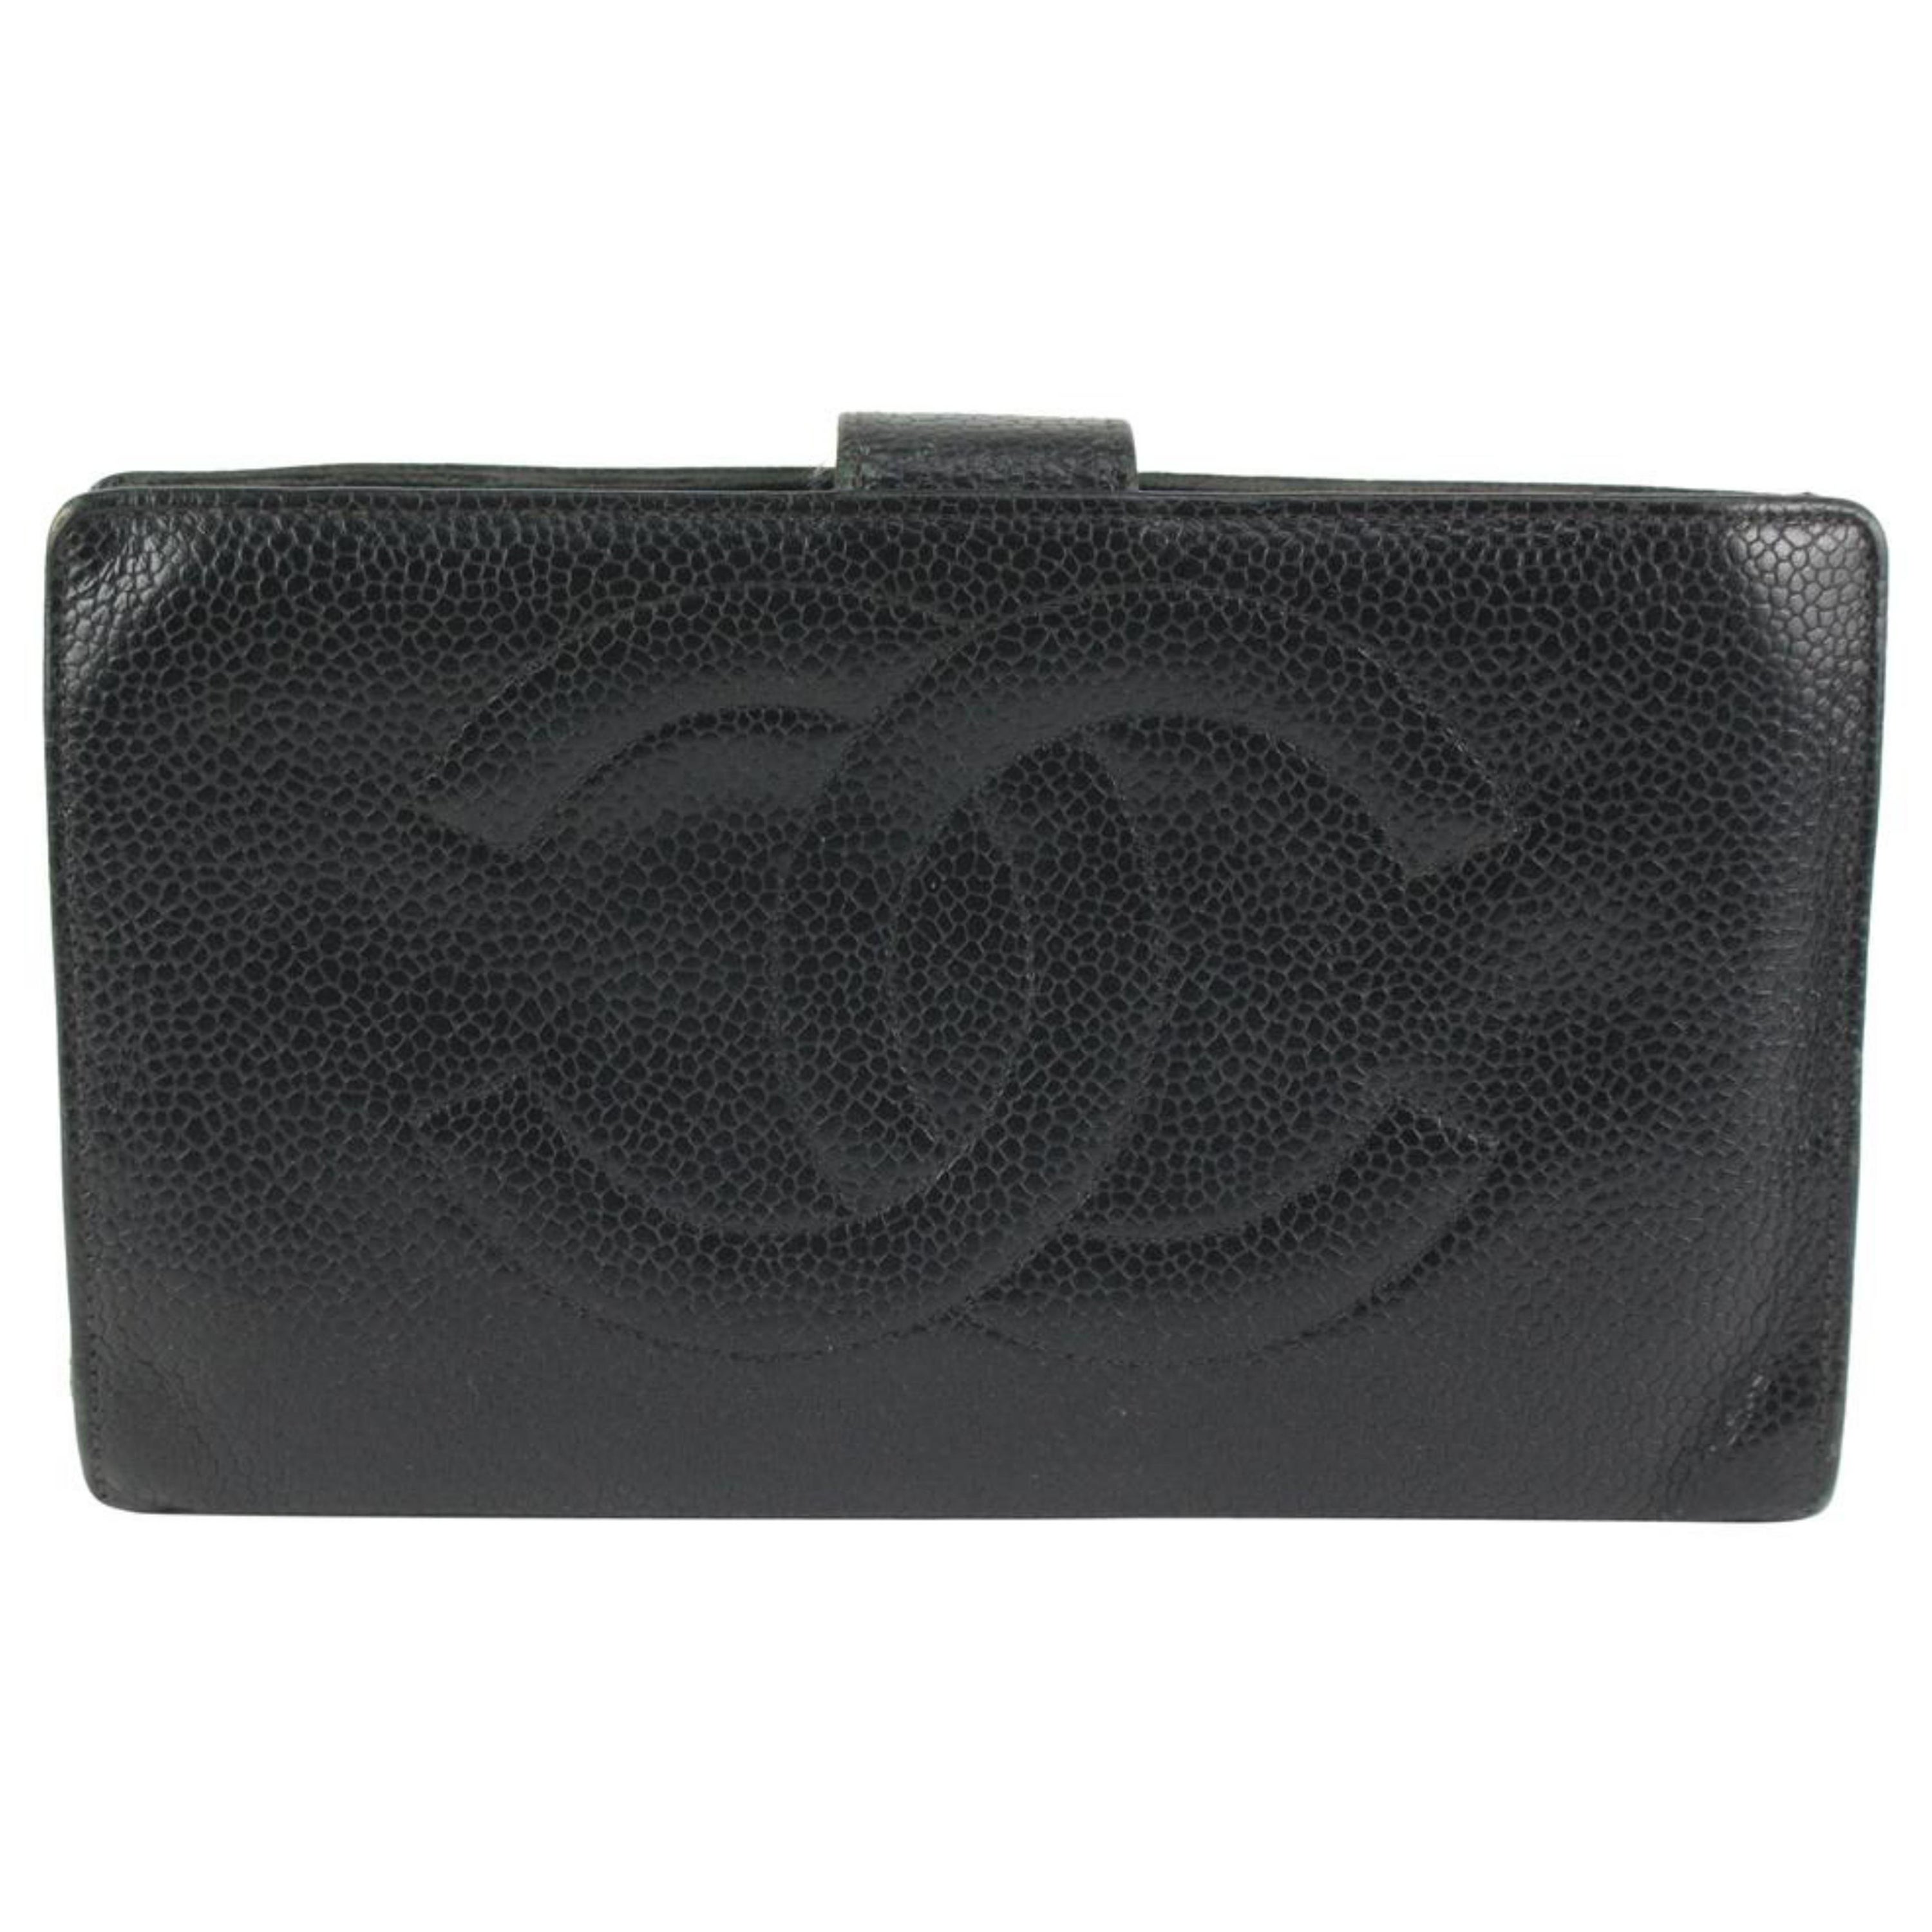 Chanel Black Caviar Leather CC Logo Flap Long Wallet 1213c18 For Sale